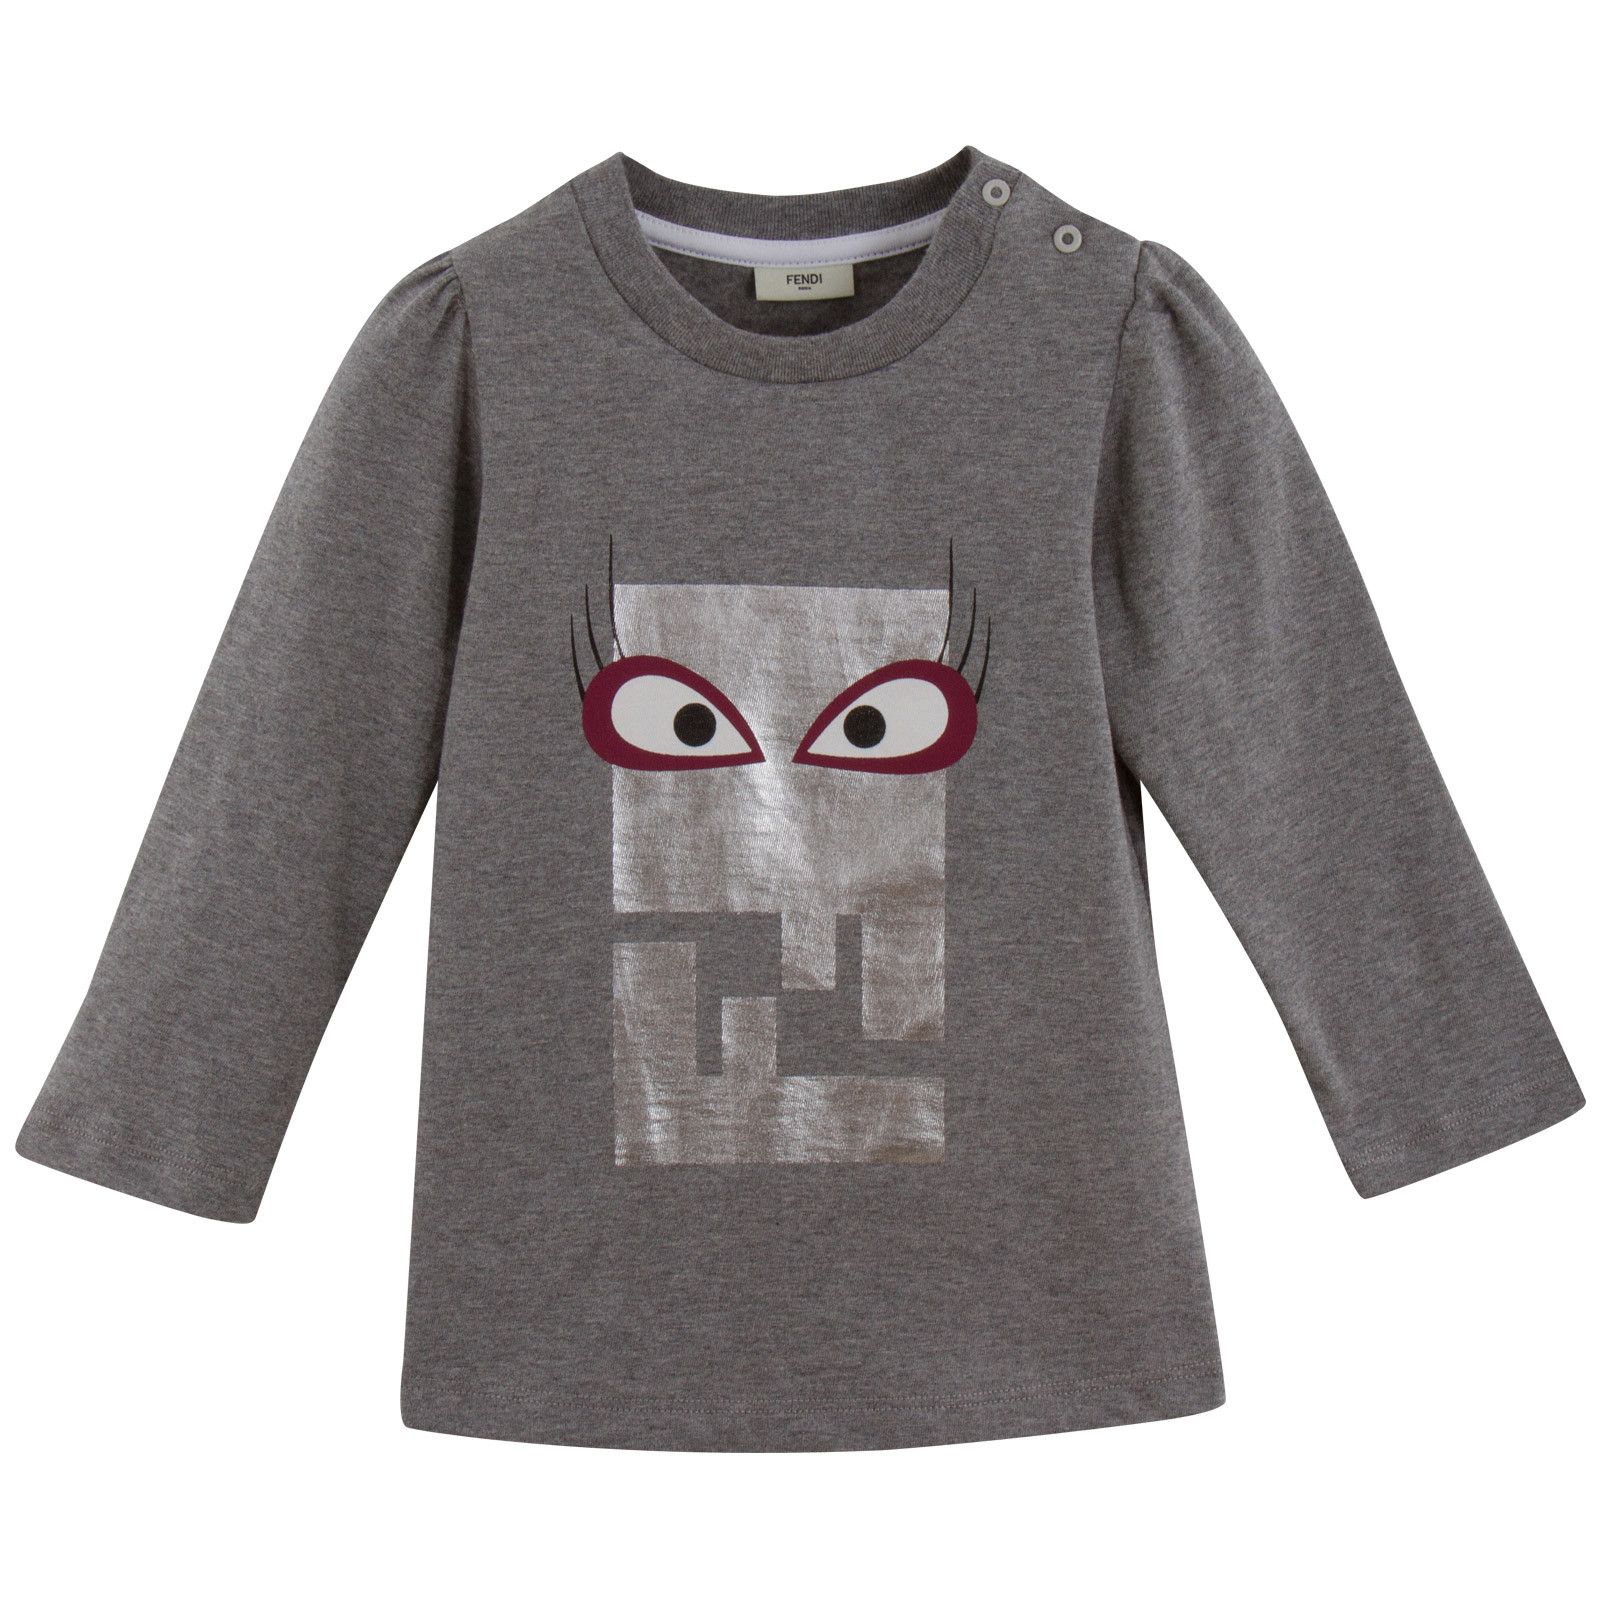 Baby Girls Grey Cotton Monster Printed T-Shirt - CÉMAROSE | Children's Fashion Store - 1